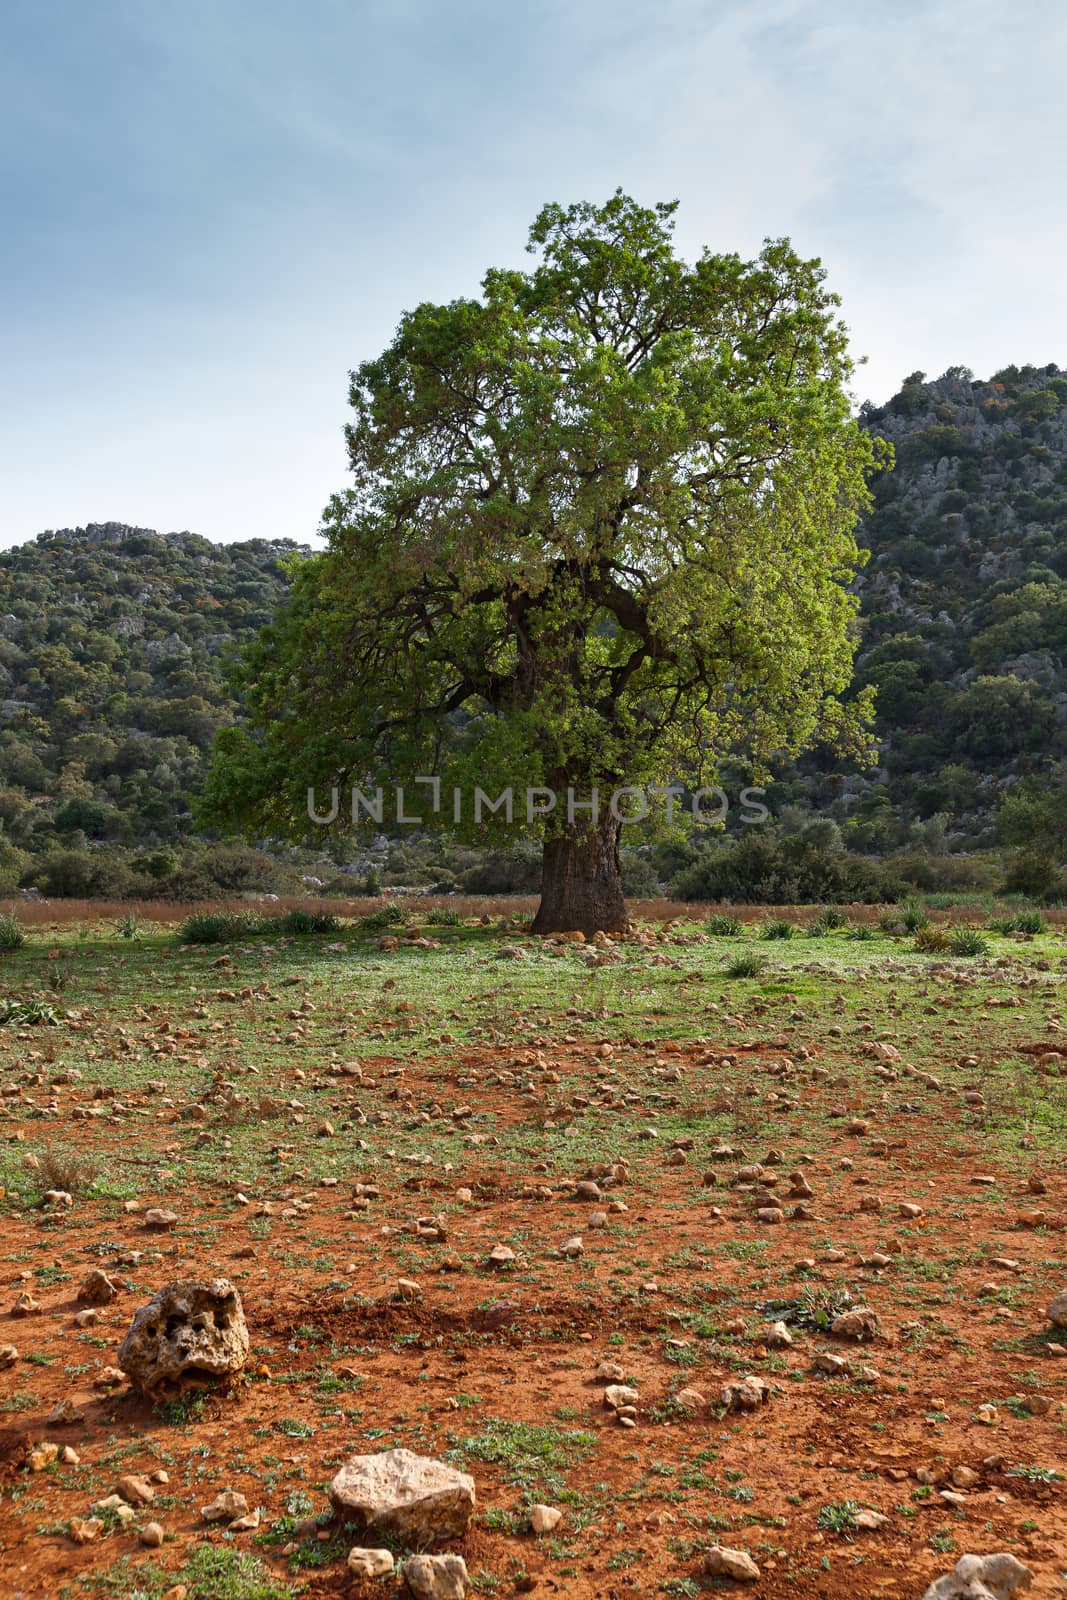 Single tree in the valley by igor_stramyk